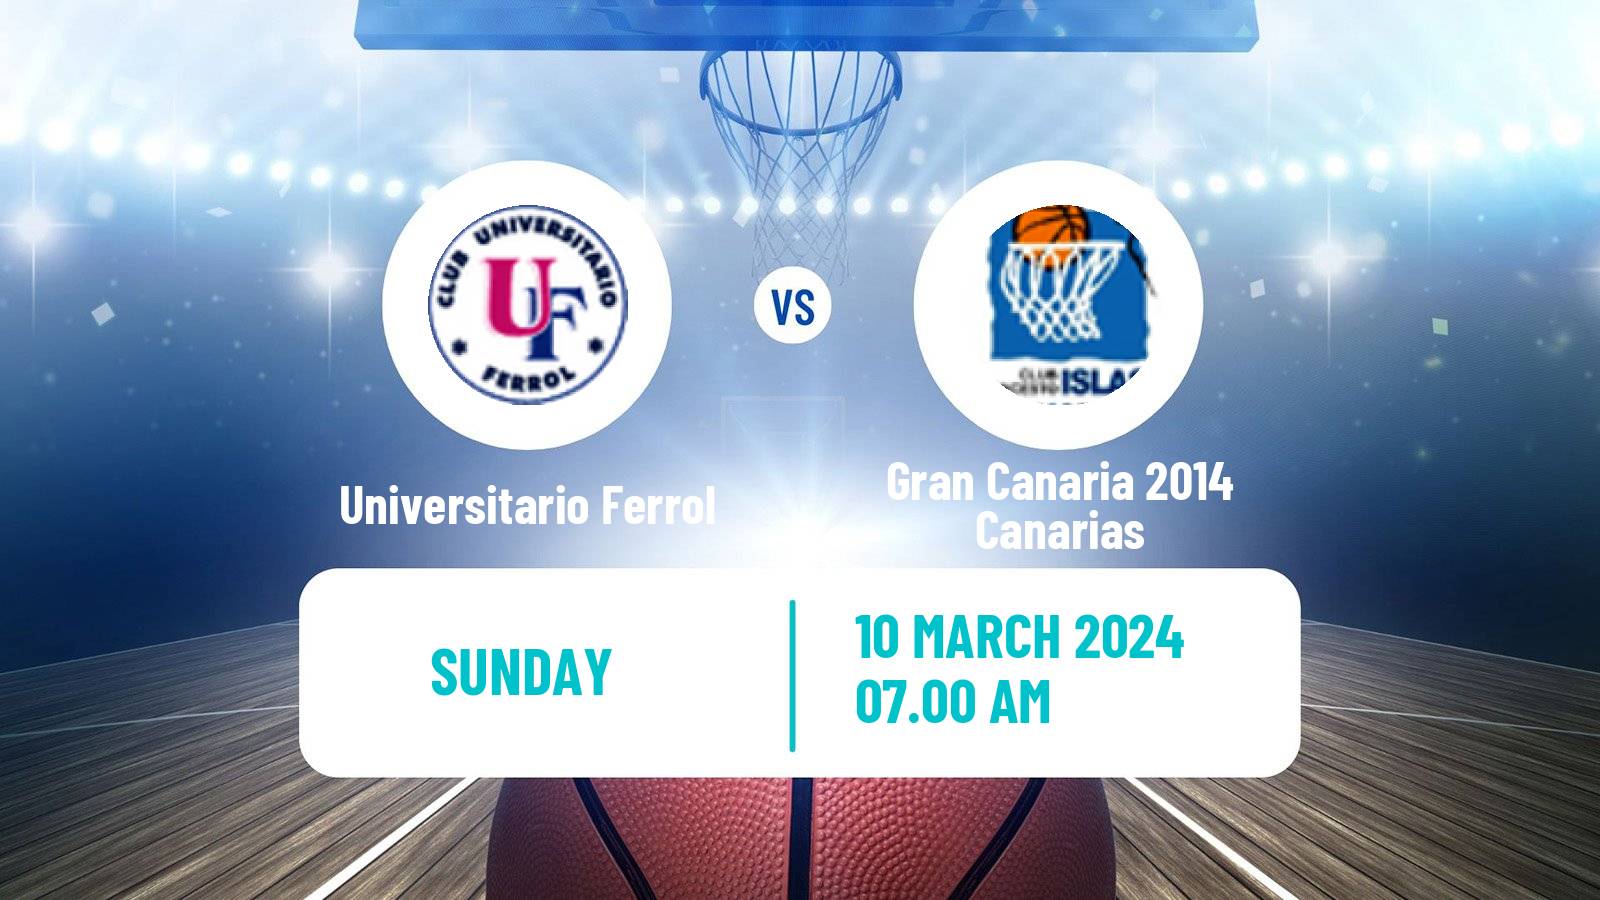 Basketball Spanish Liga Femenina Basketball Universitario Ferrol - Gran Canaria 2014 Canarias